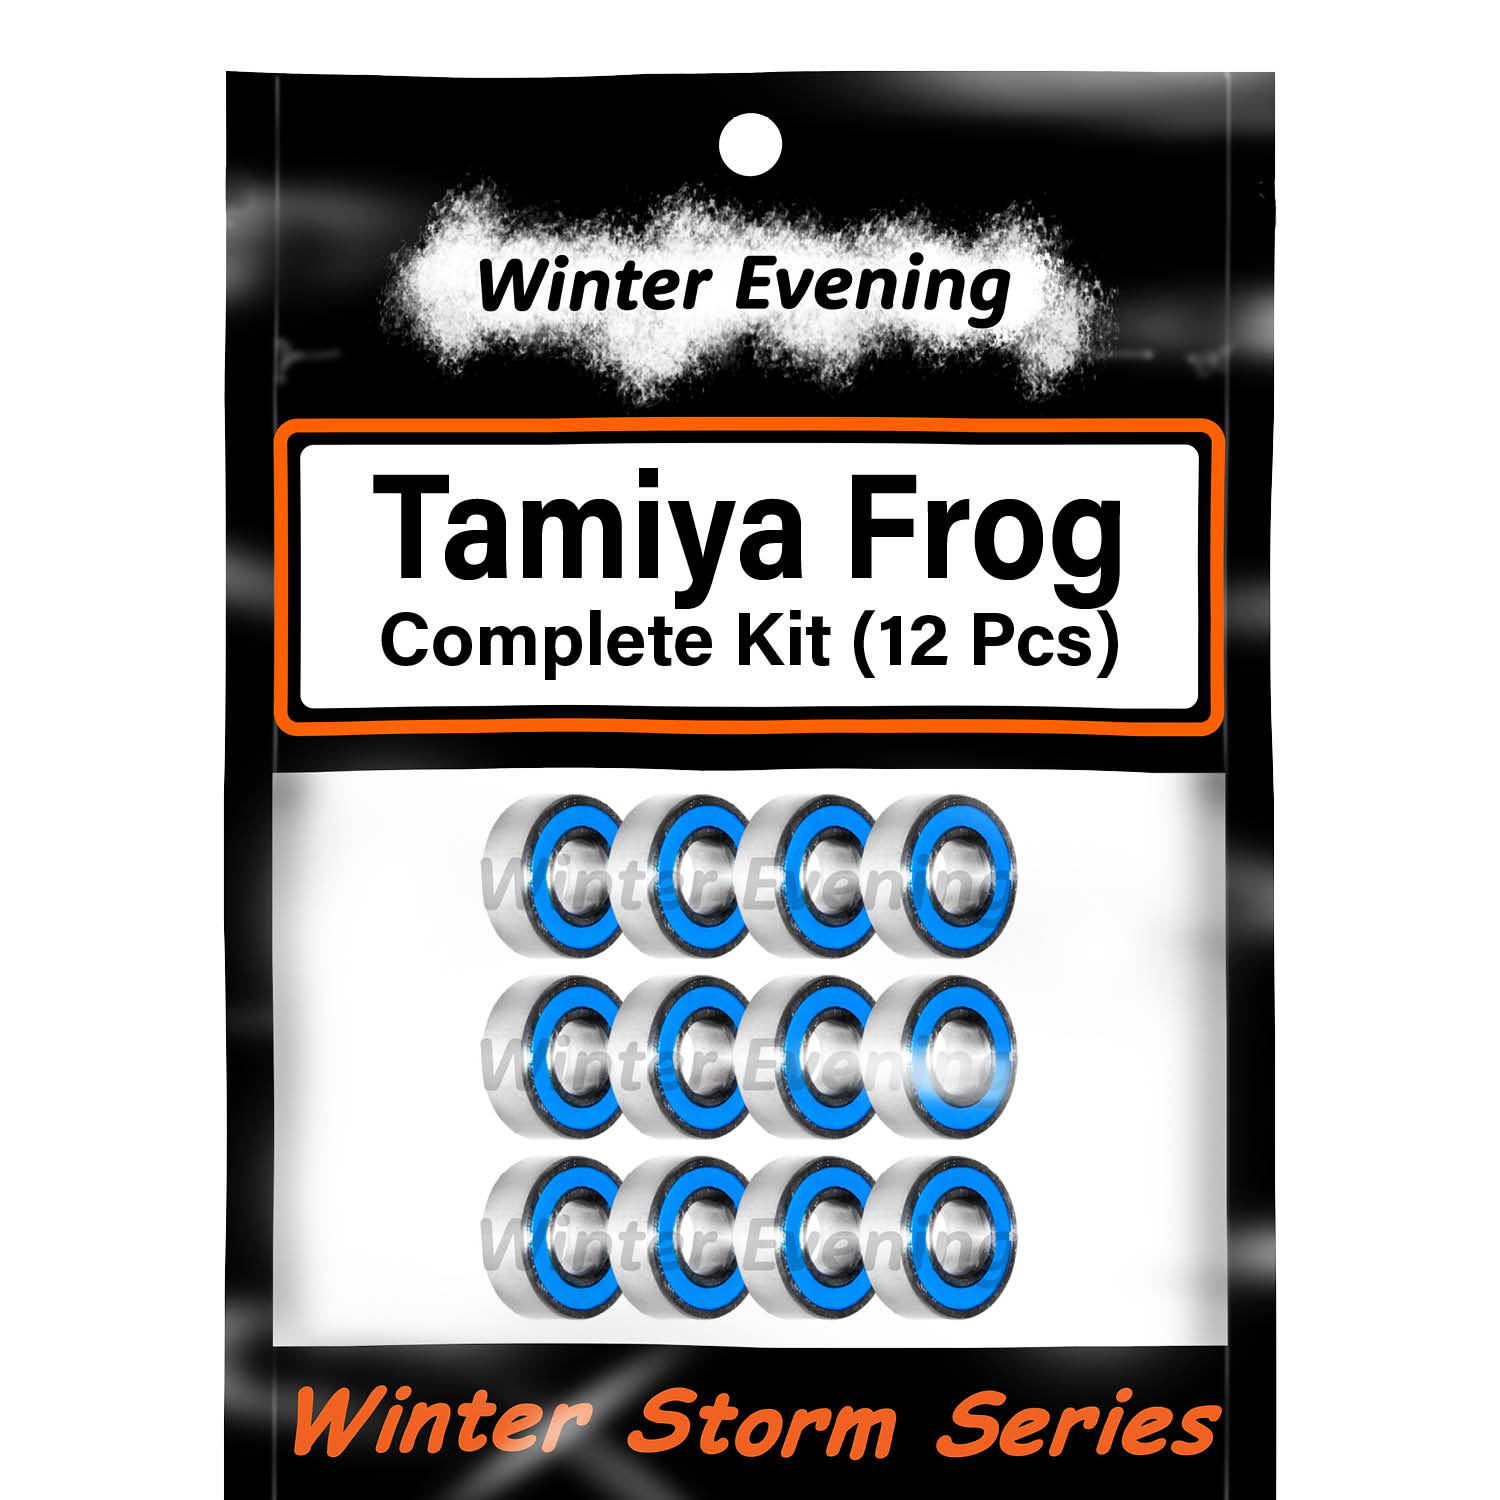 Tamiya Frog, Super Blackfoot, & Stadium Blitzer (12 Pcs Rubber Seal Bearing Kit)